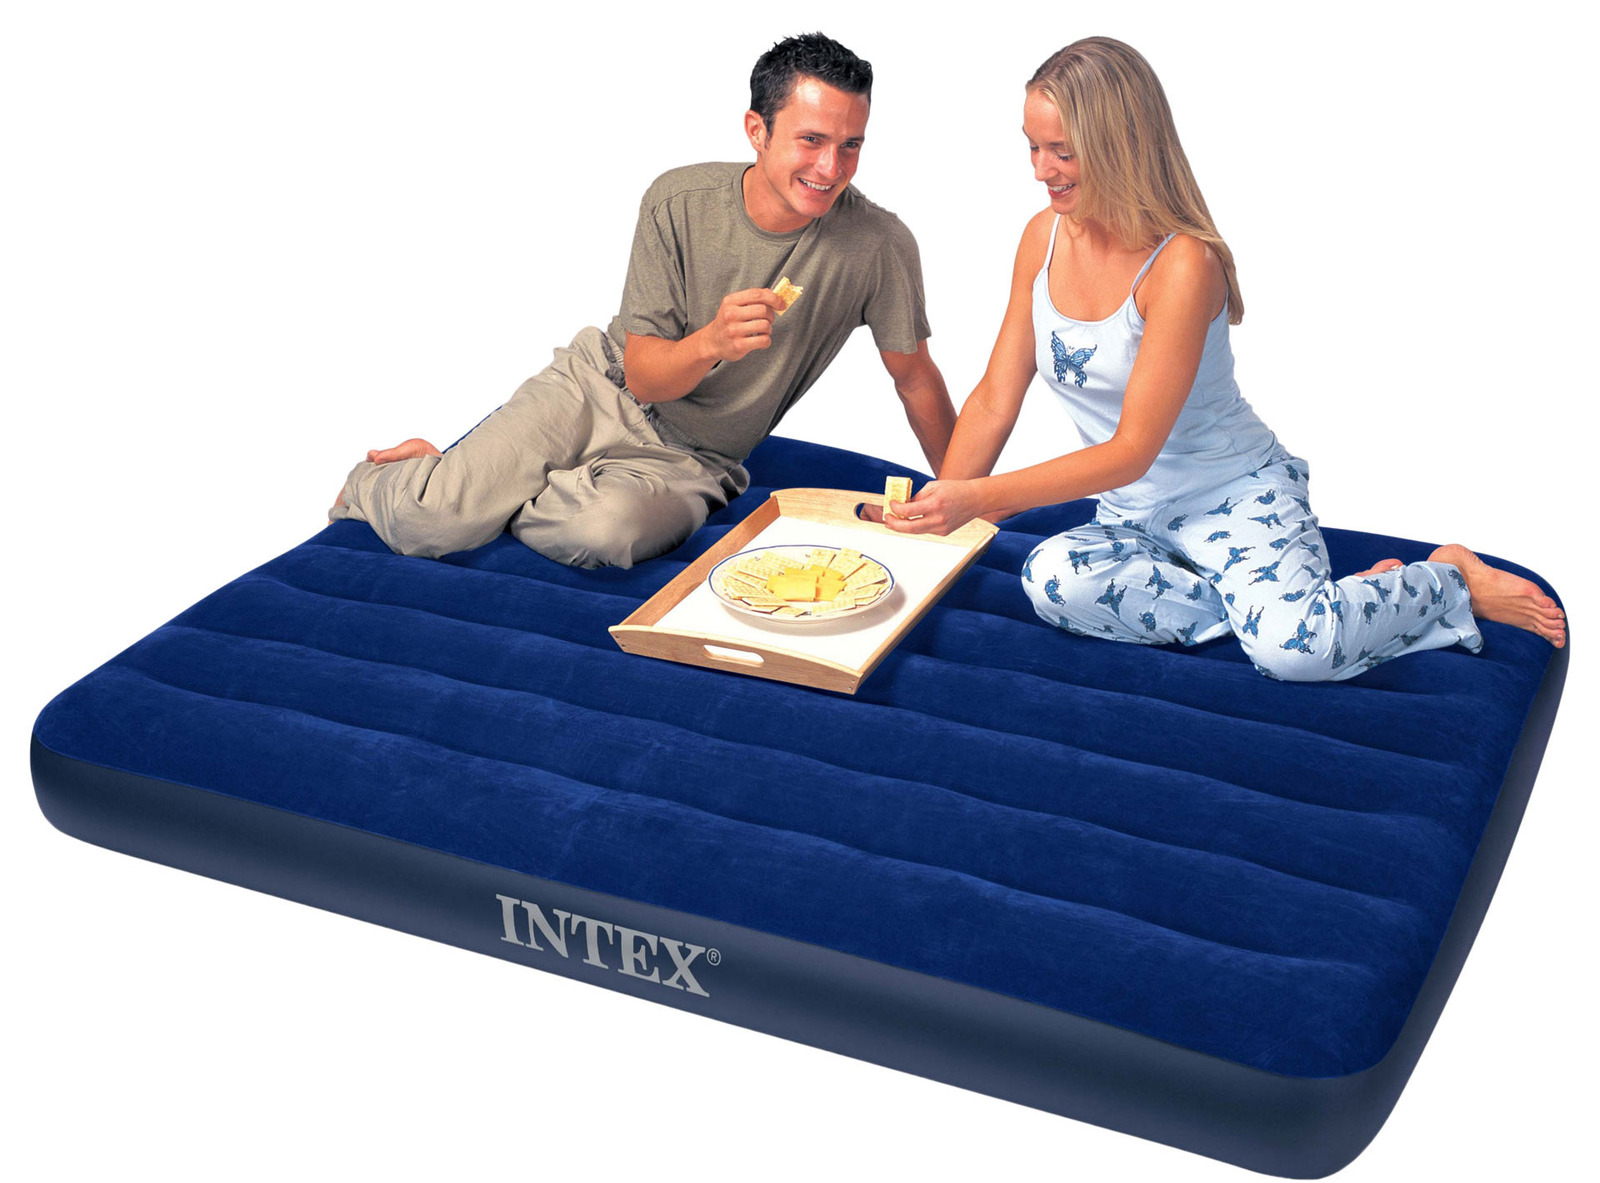 intex air mattress is cold to sleep on